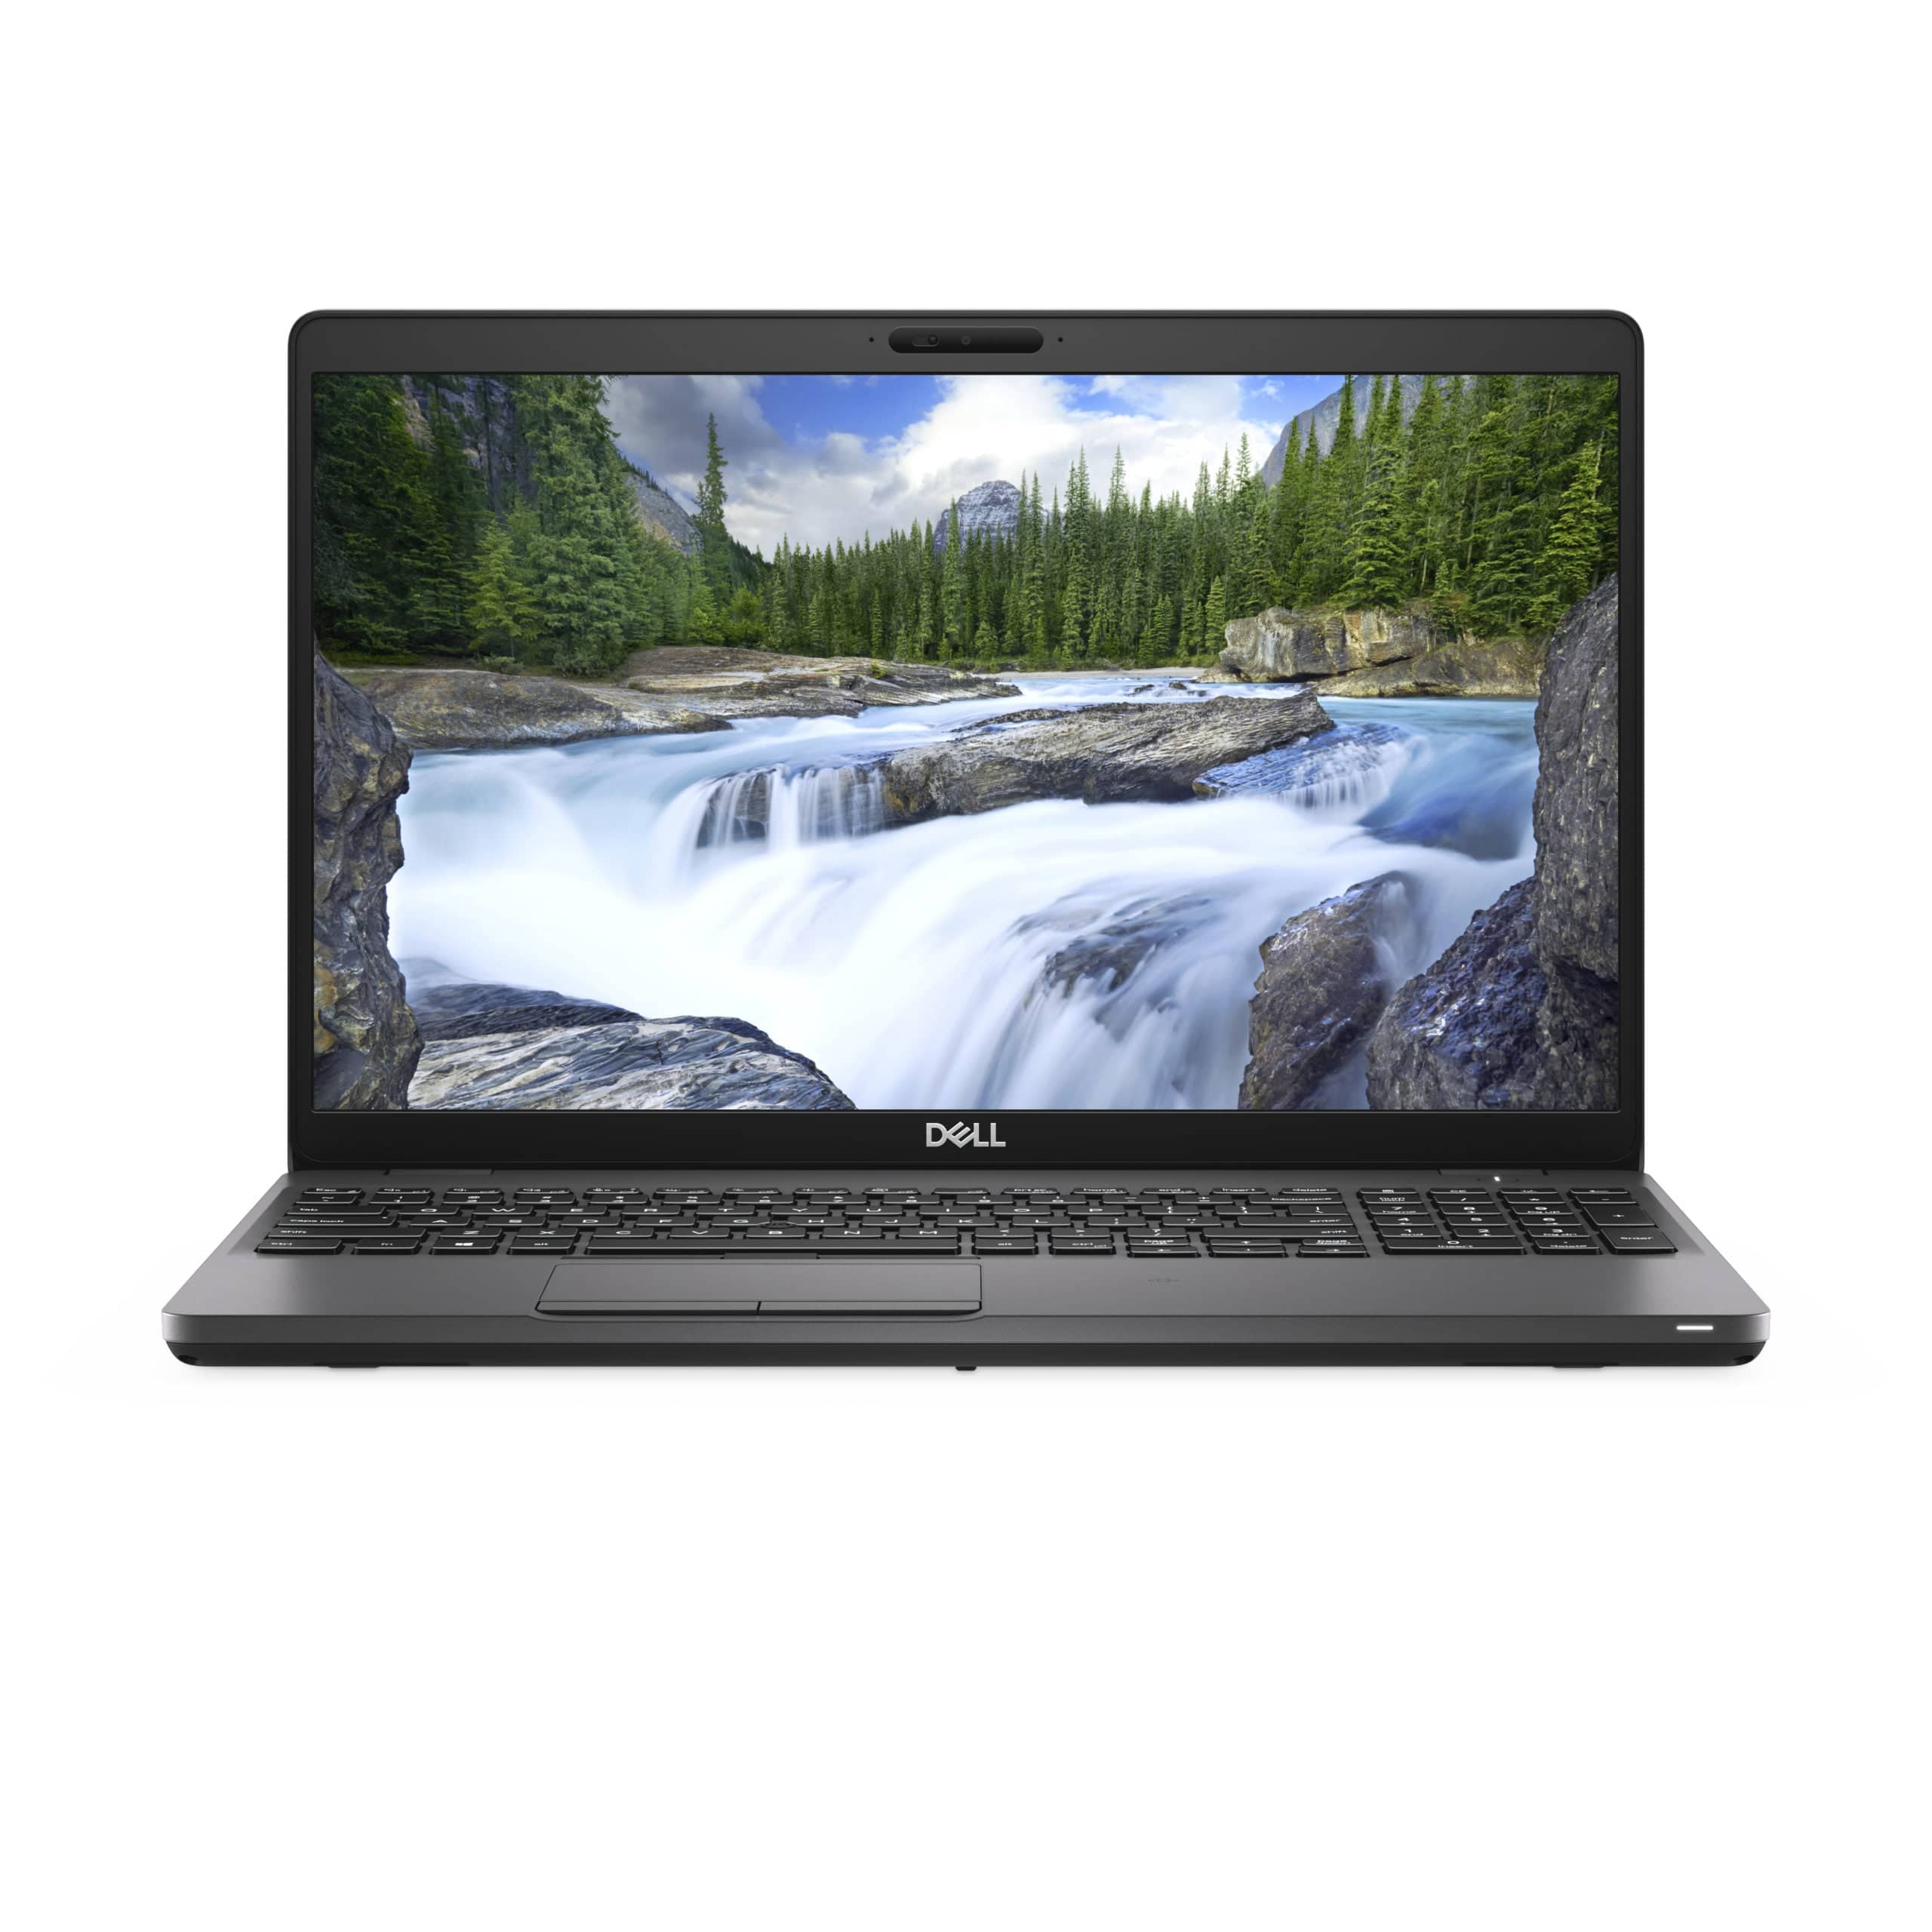 DELL Laptops Dell Latitude 5501 Core i7 16GB 512GB 15" Nvidia GeForce MX150 laptop (Renewed)